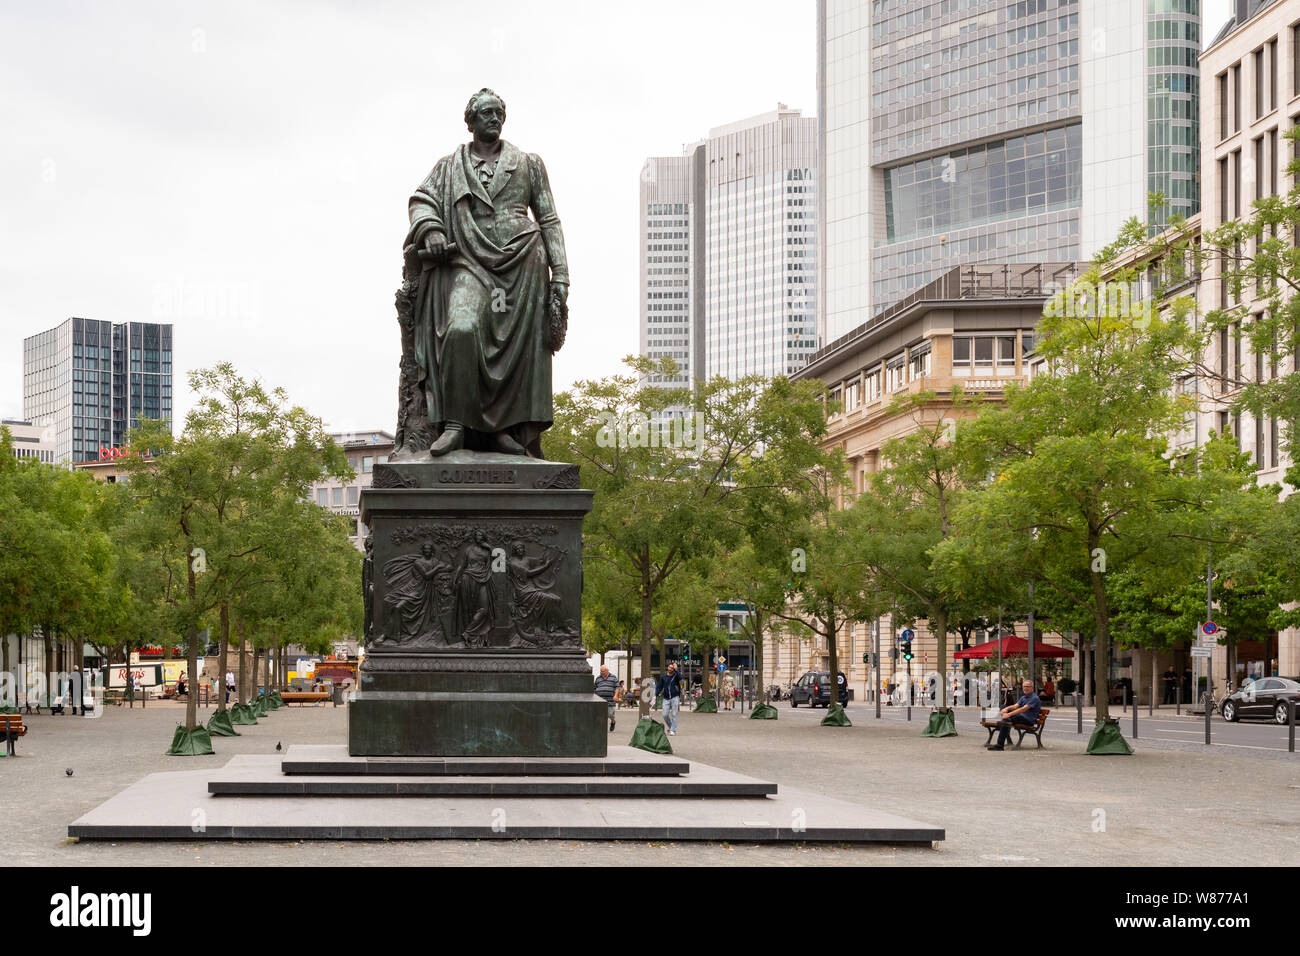 Johann Wolfgang von Goethe la statue, la place Goetheplatz, Frankfurt am Main, Germany, Europe Banque D'Images